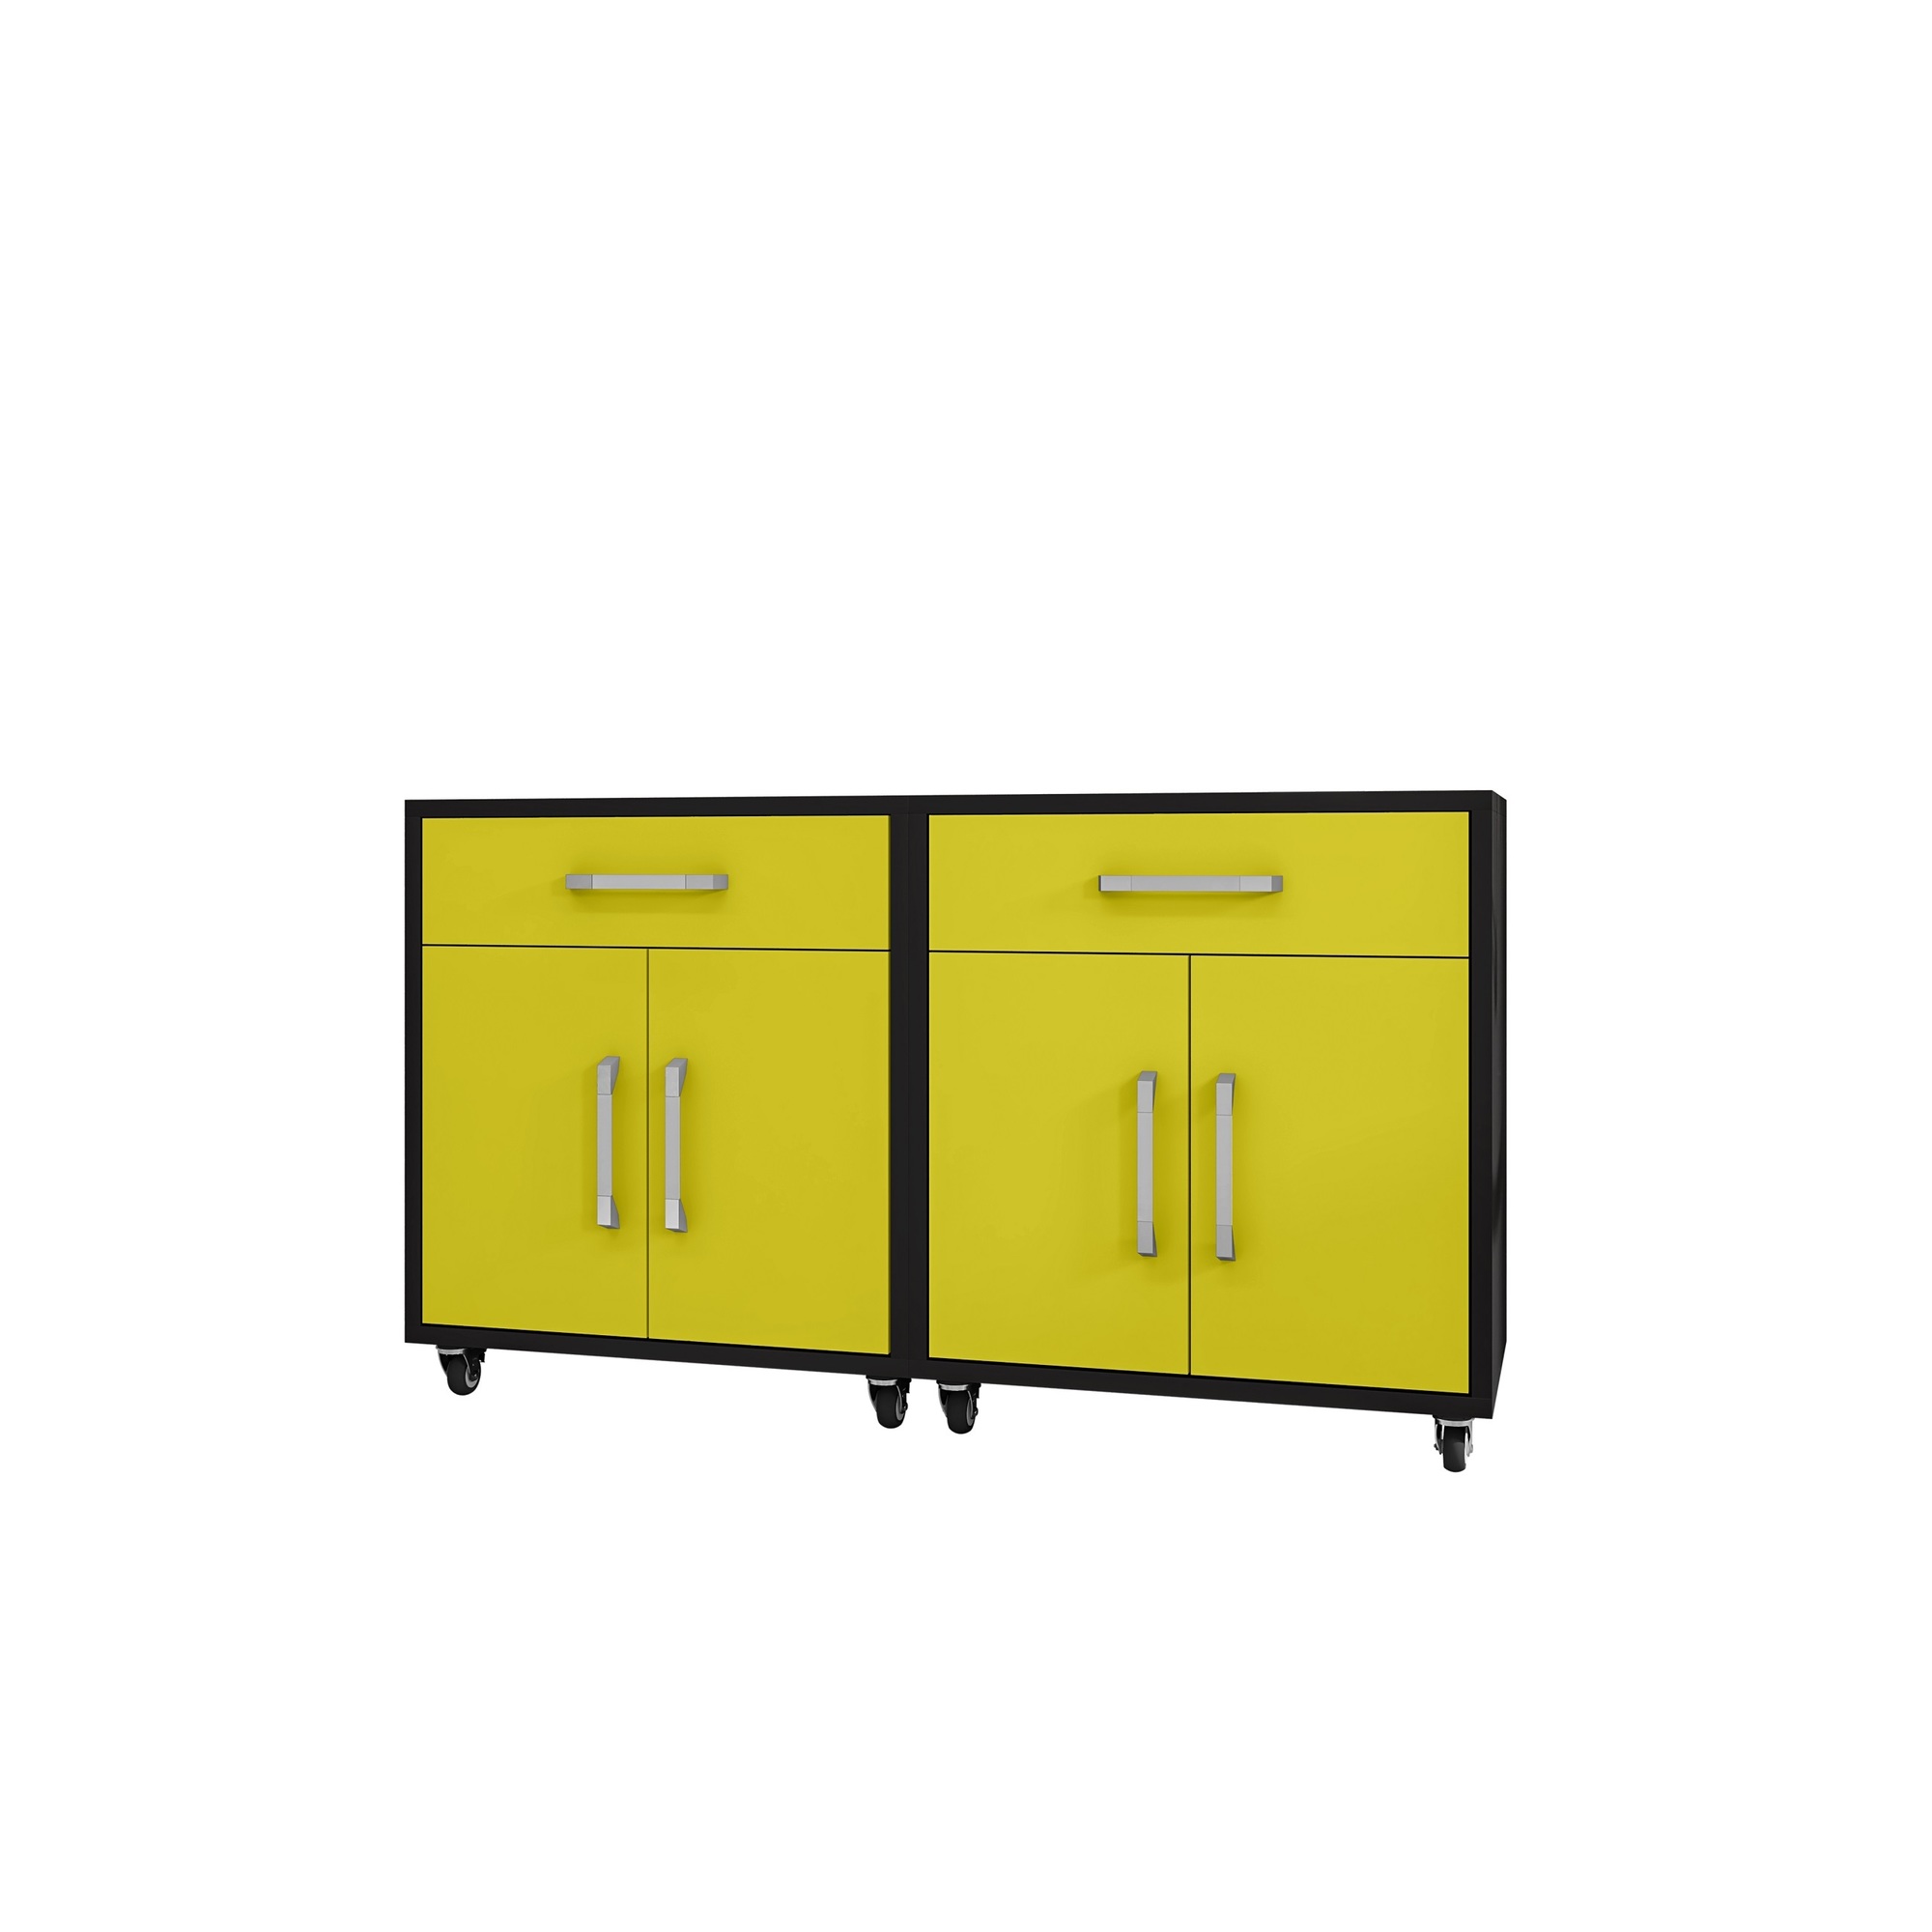 Manhattan Comfort, Eiffel Mobile Garage Cabinet in Black Yellow Set 2 Height 34.41 in, Width 56.7 in, Color Yellow, Model 2-252BMC